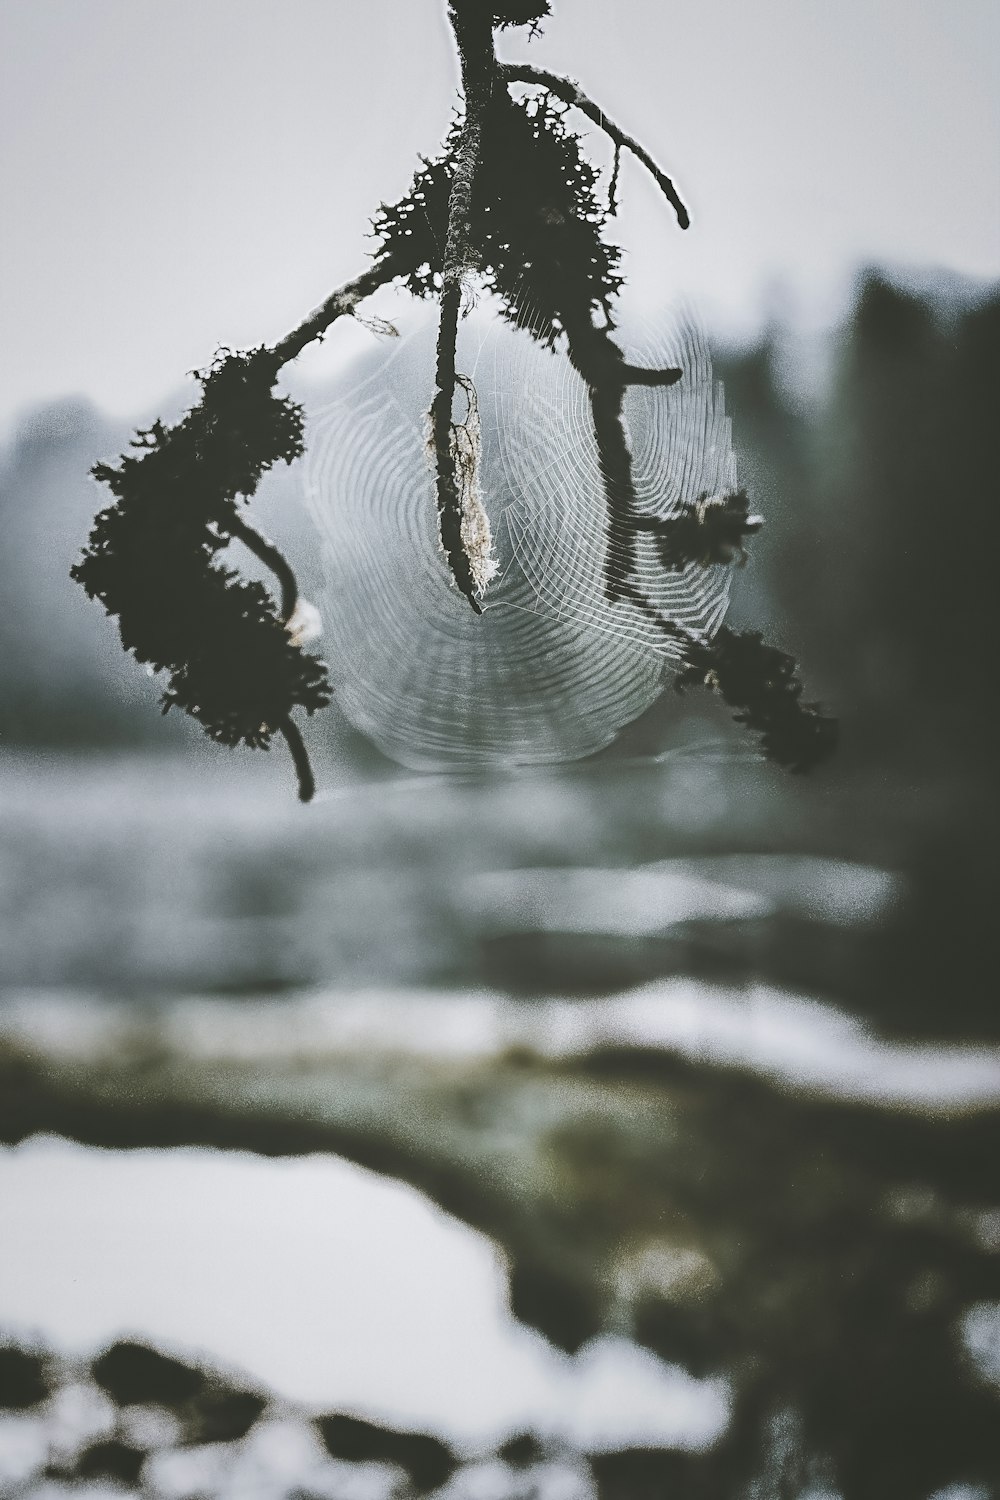 spider web in tree branch